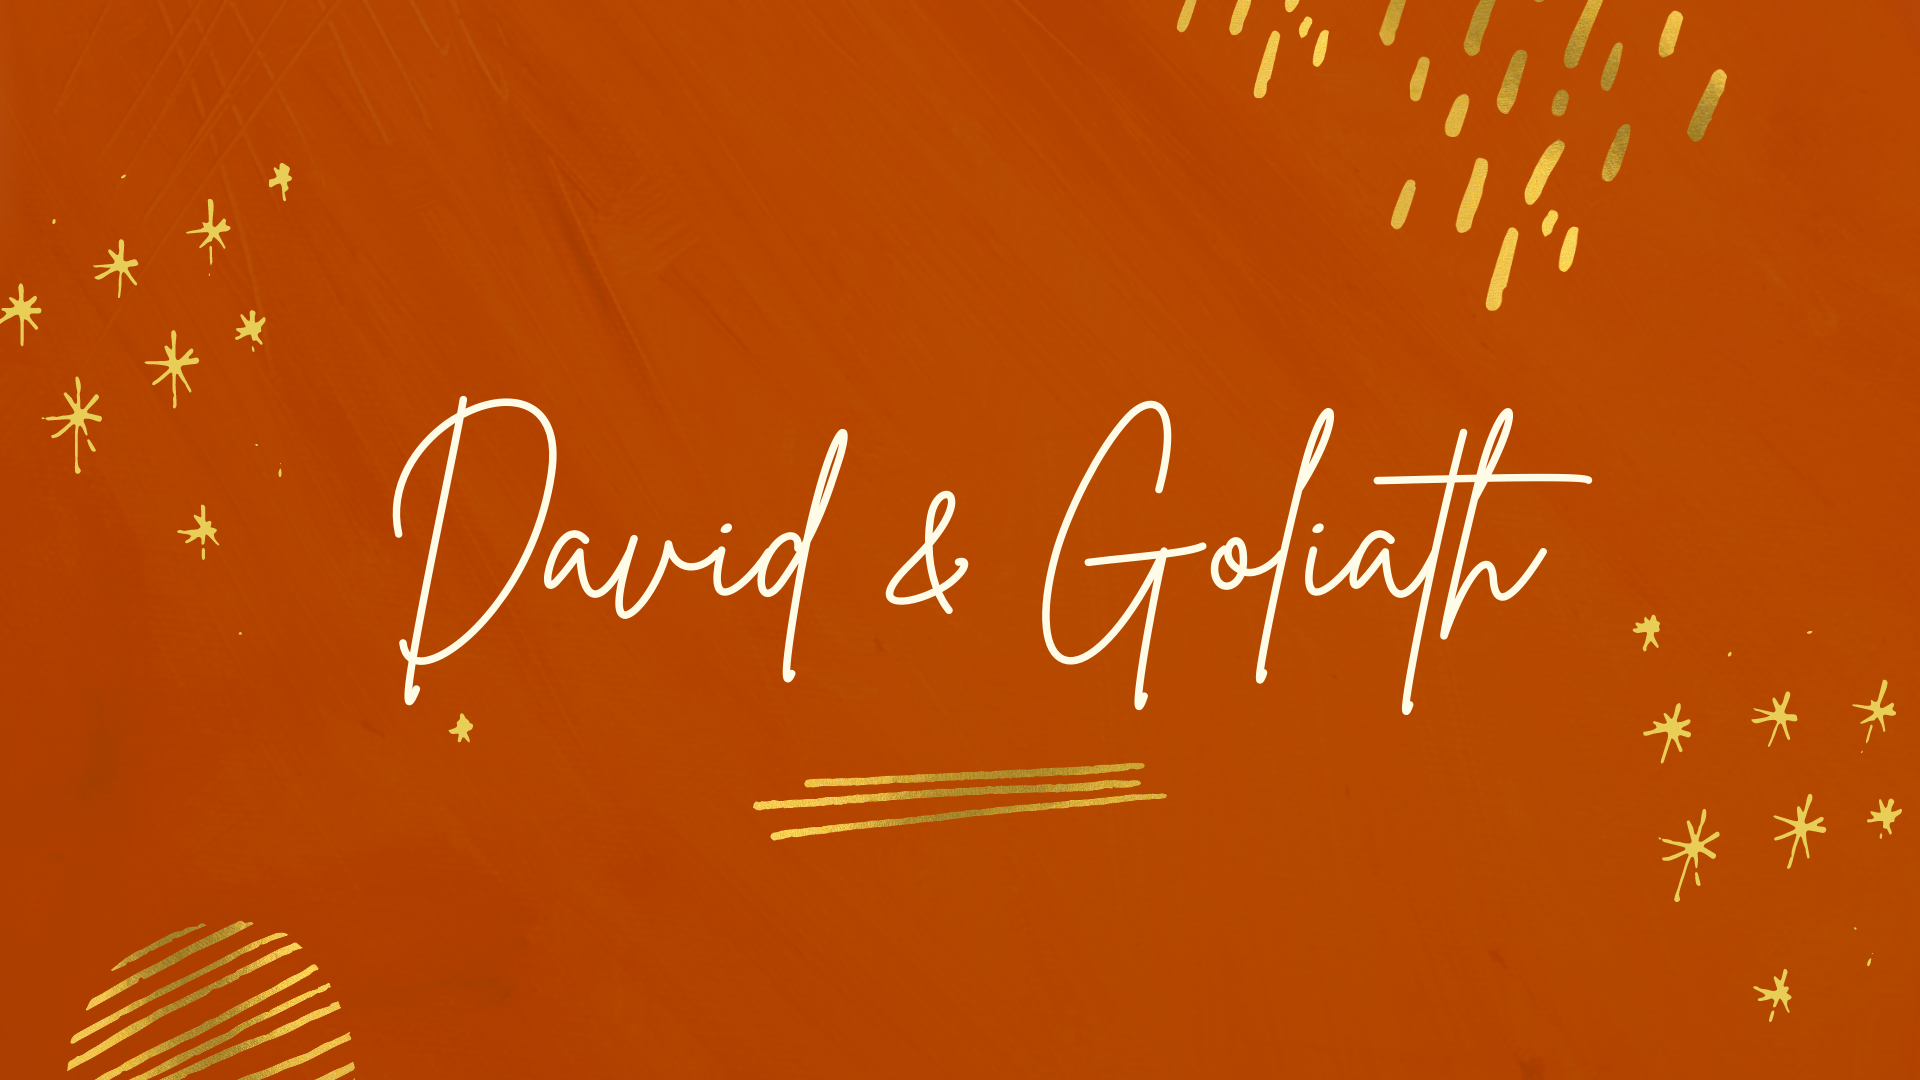 David & Goliath banner